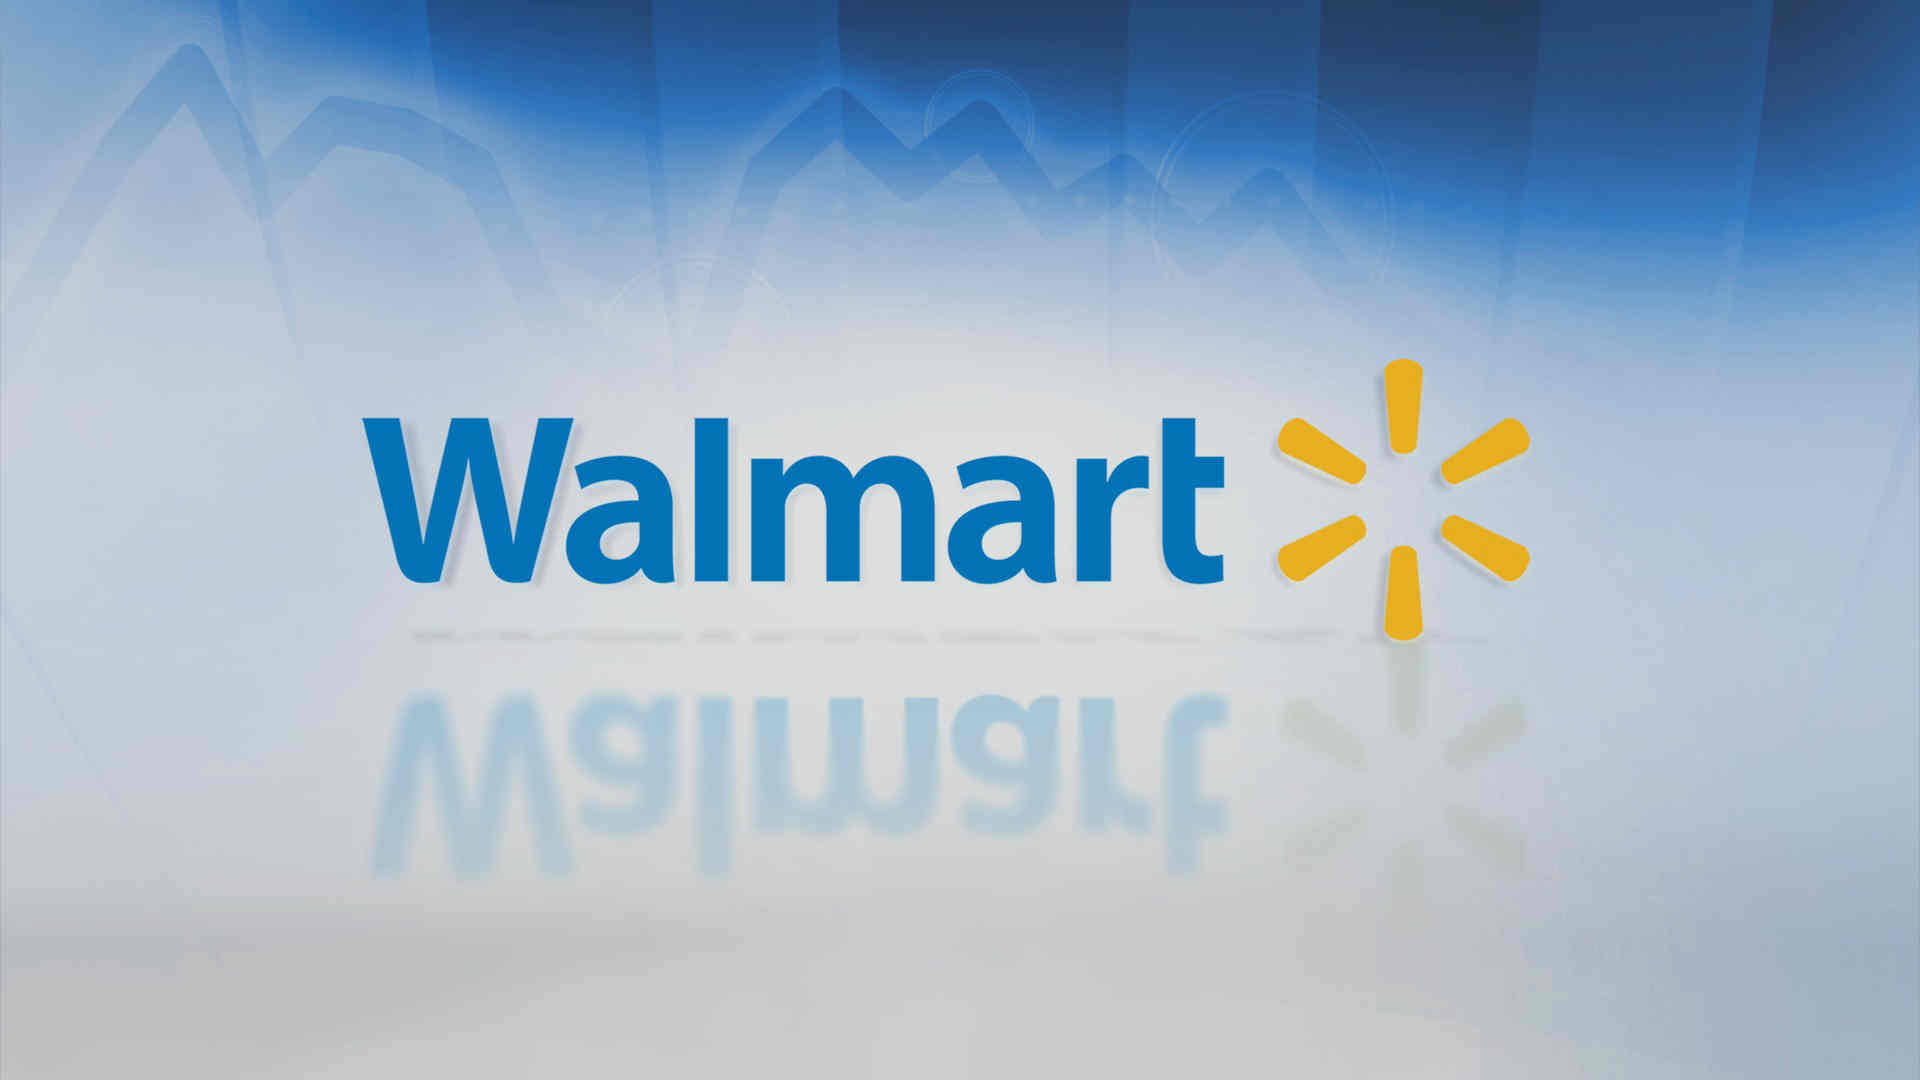 Walmart reflection logo wallpaper 